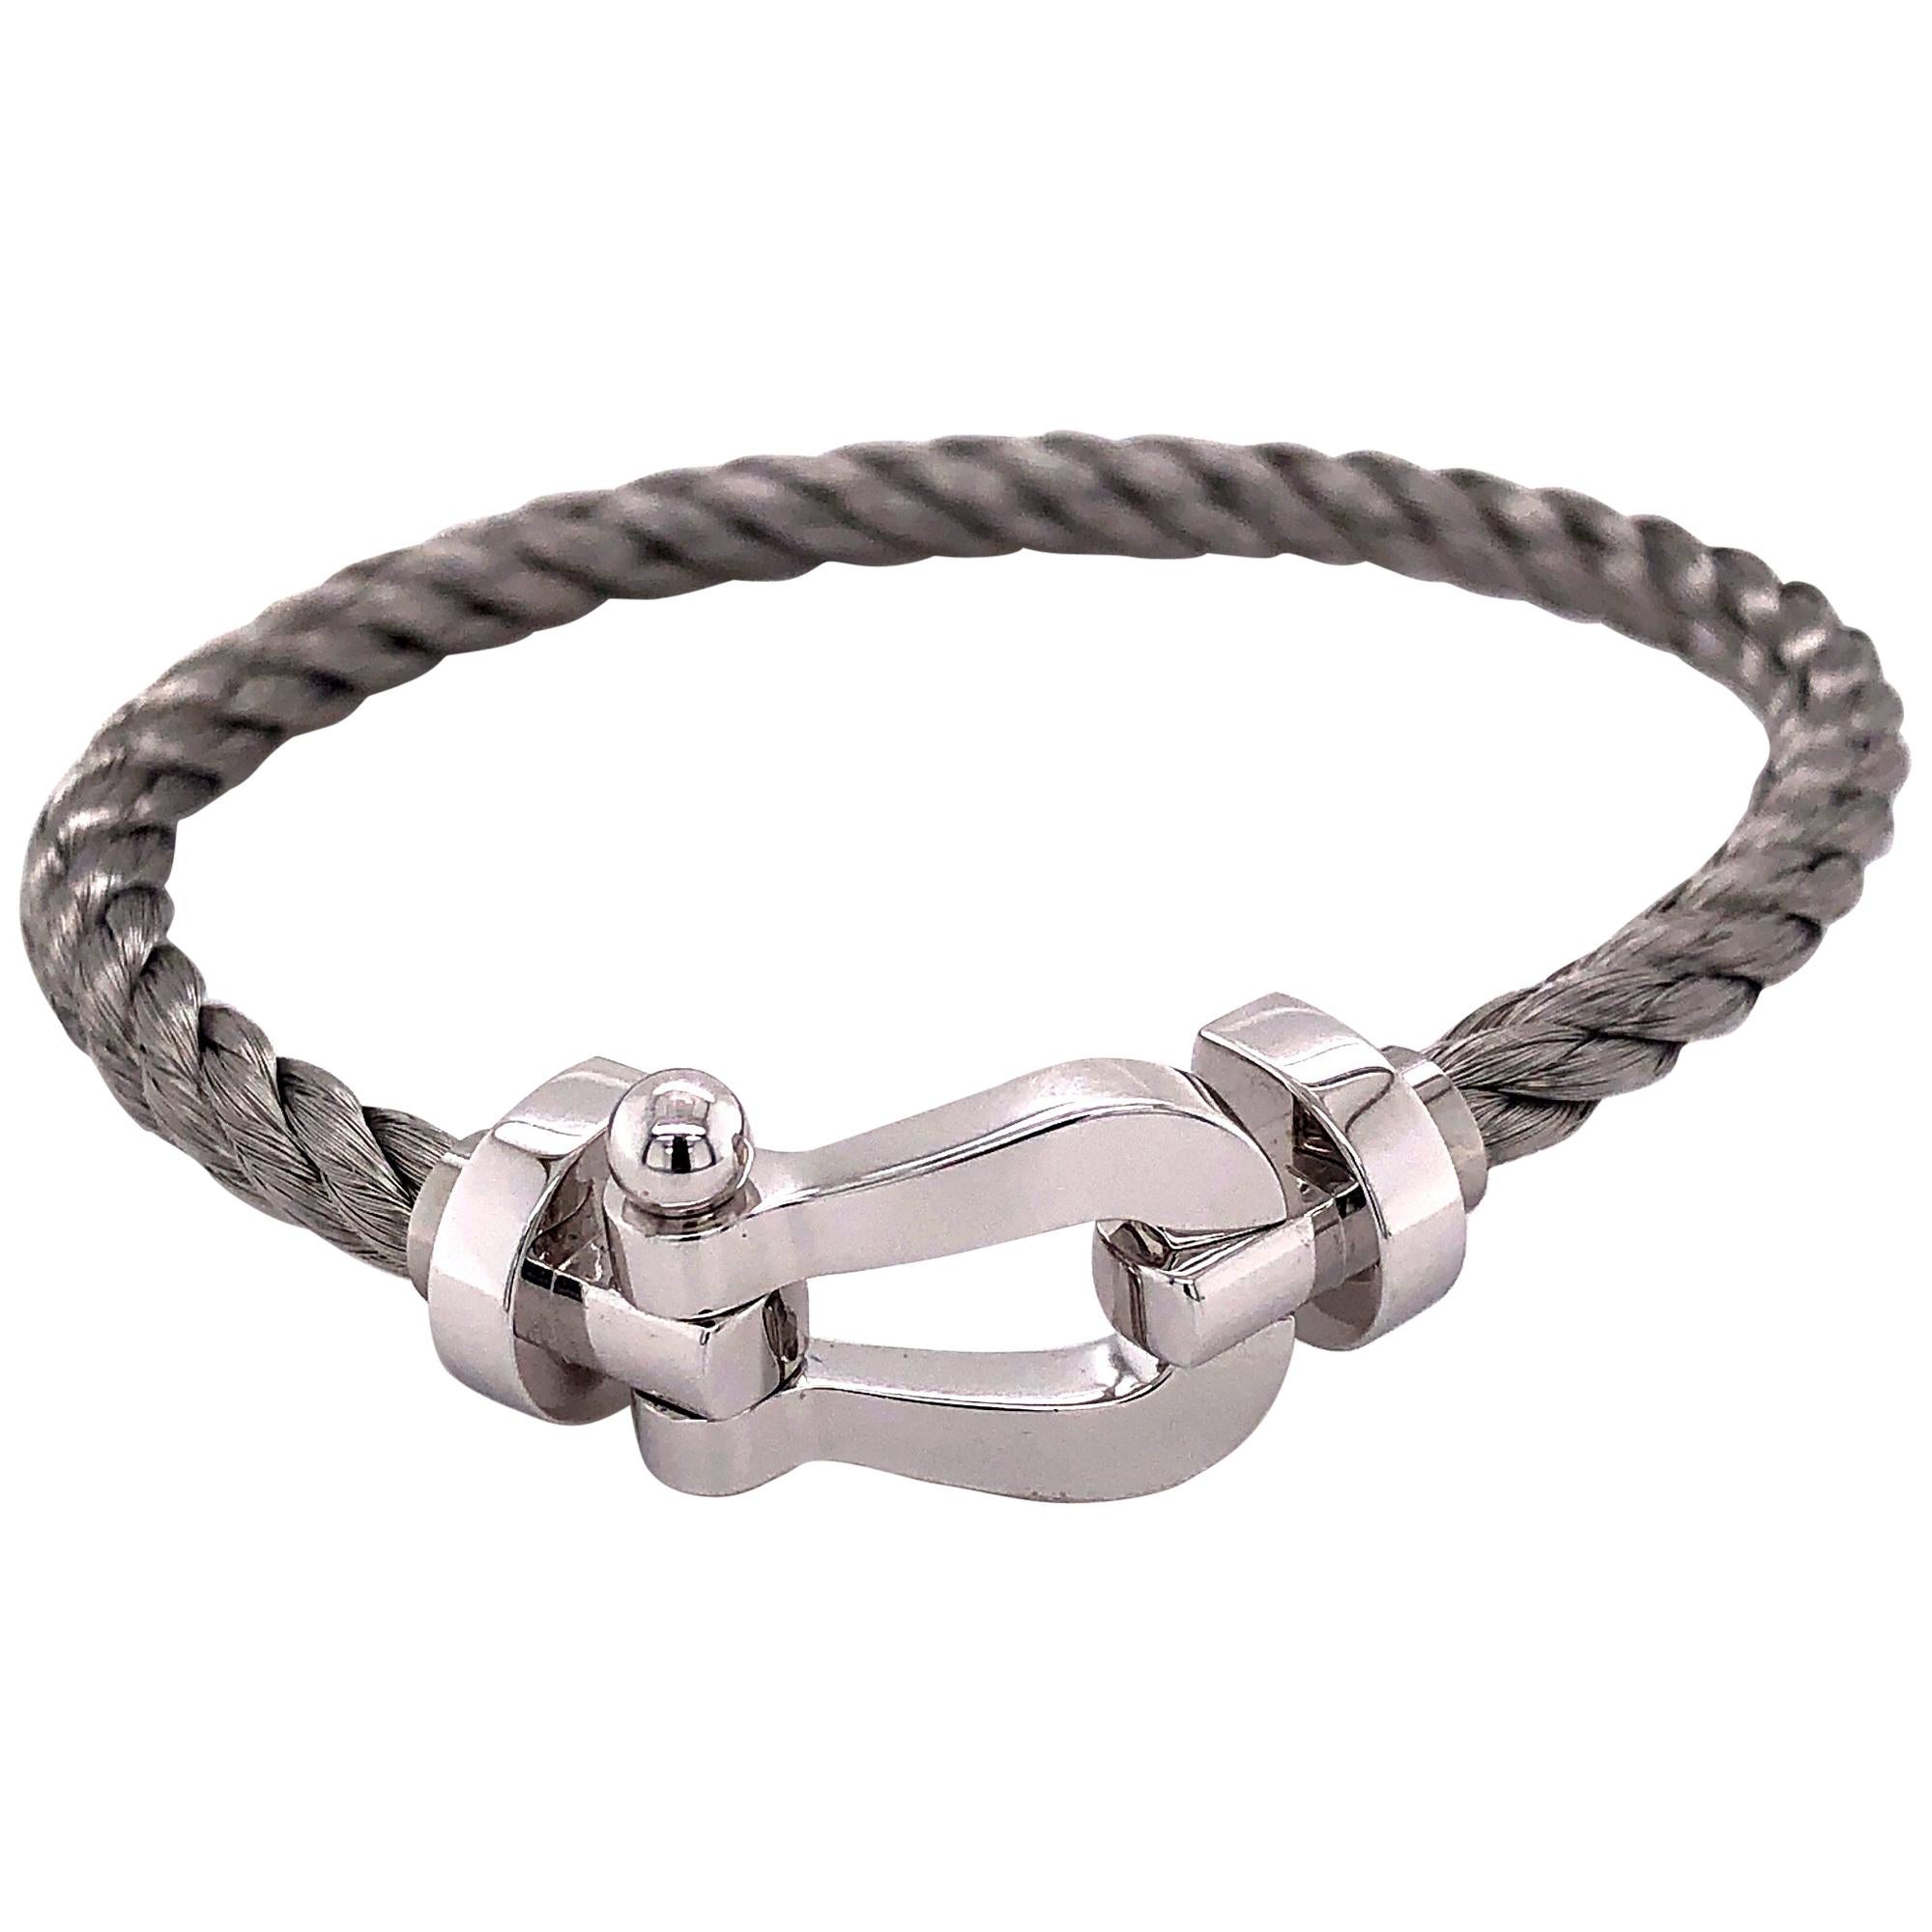 FRED Force 10 Bracelet Size Medium/15 18K White Gold 0B0077/6J0173 | eBay